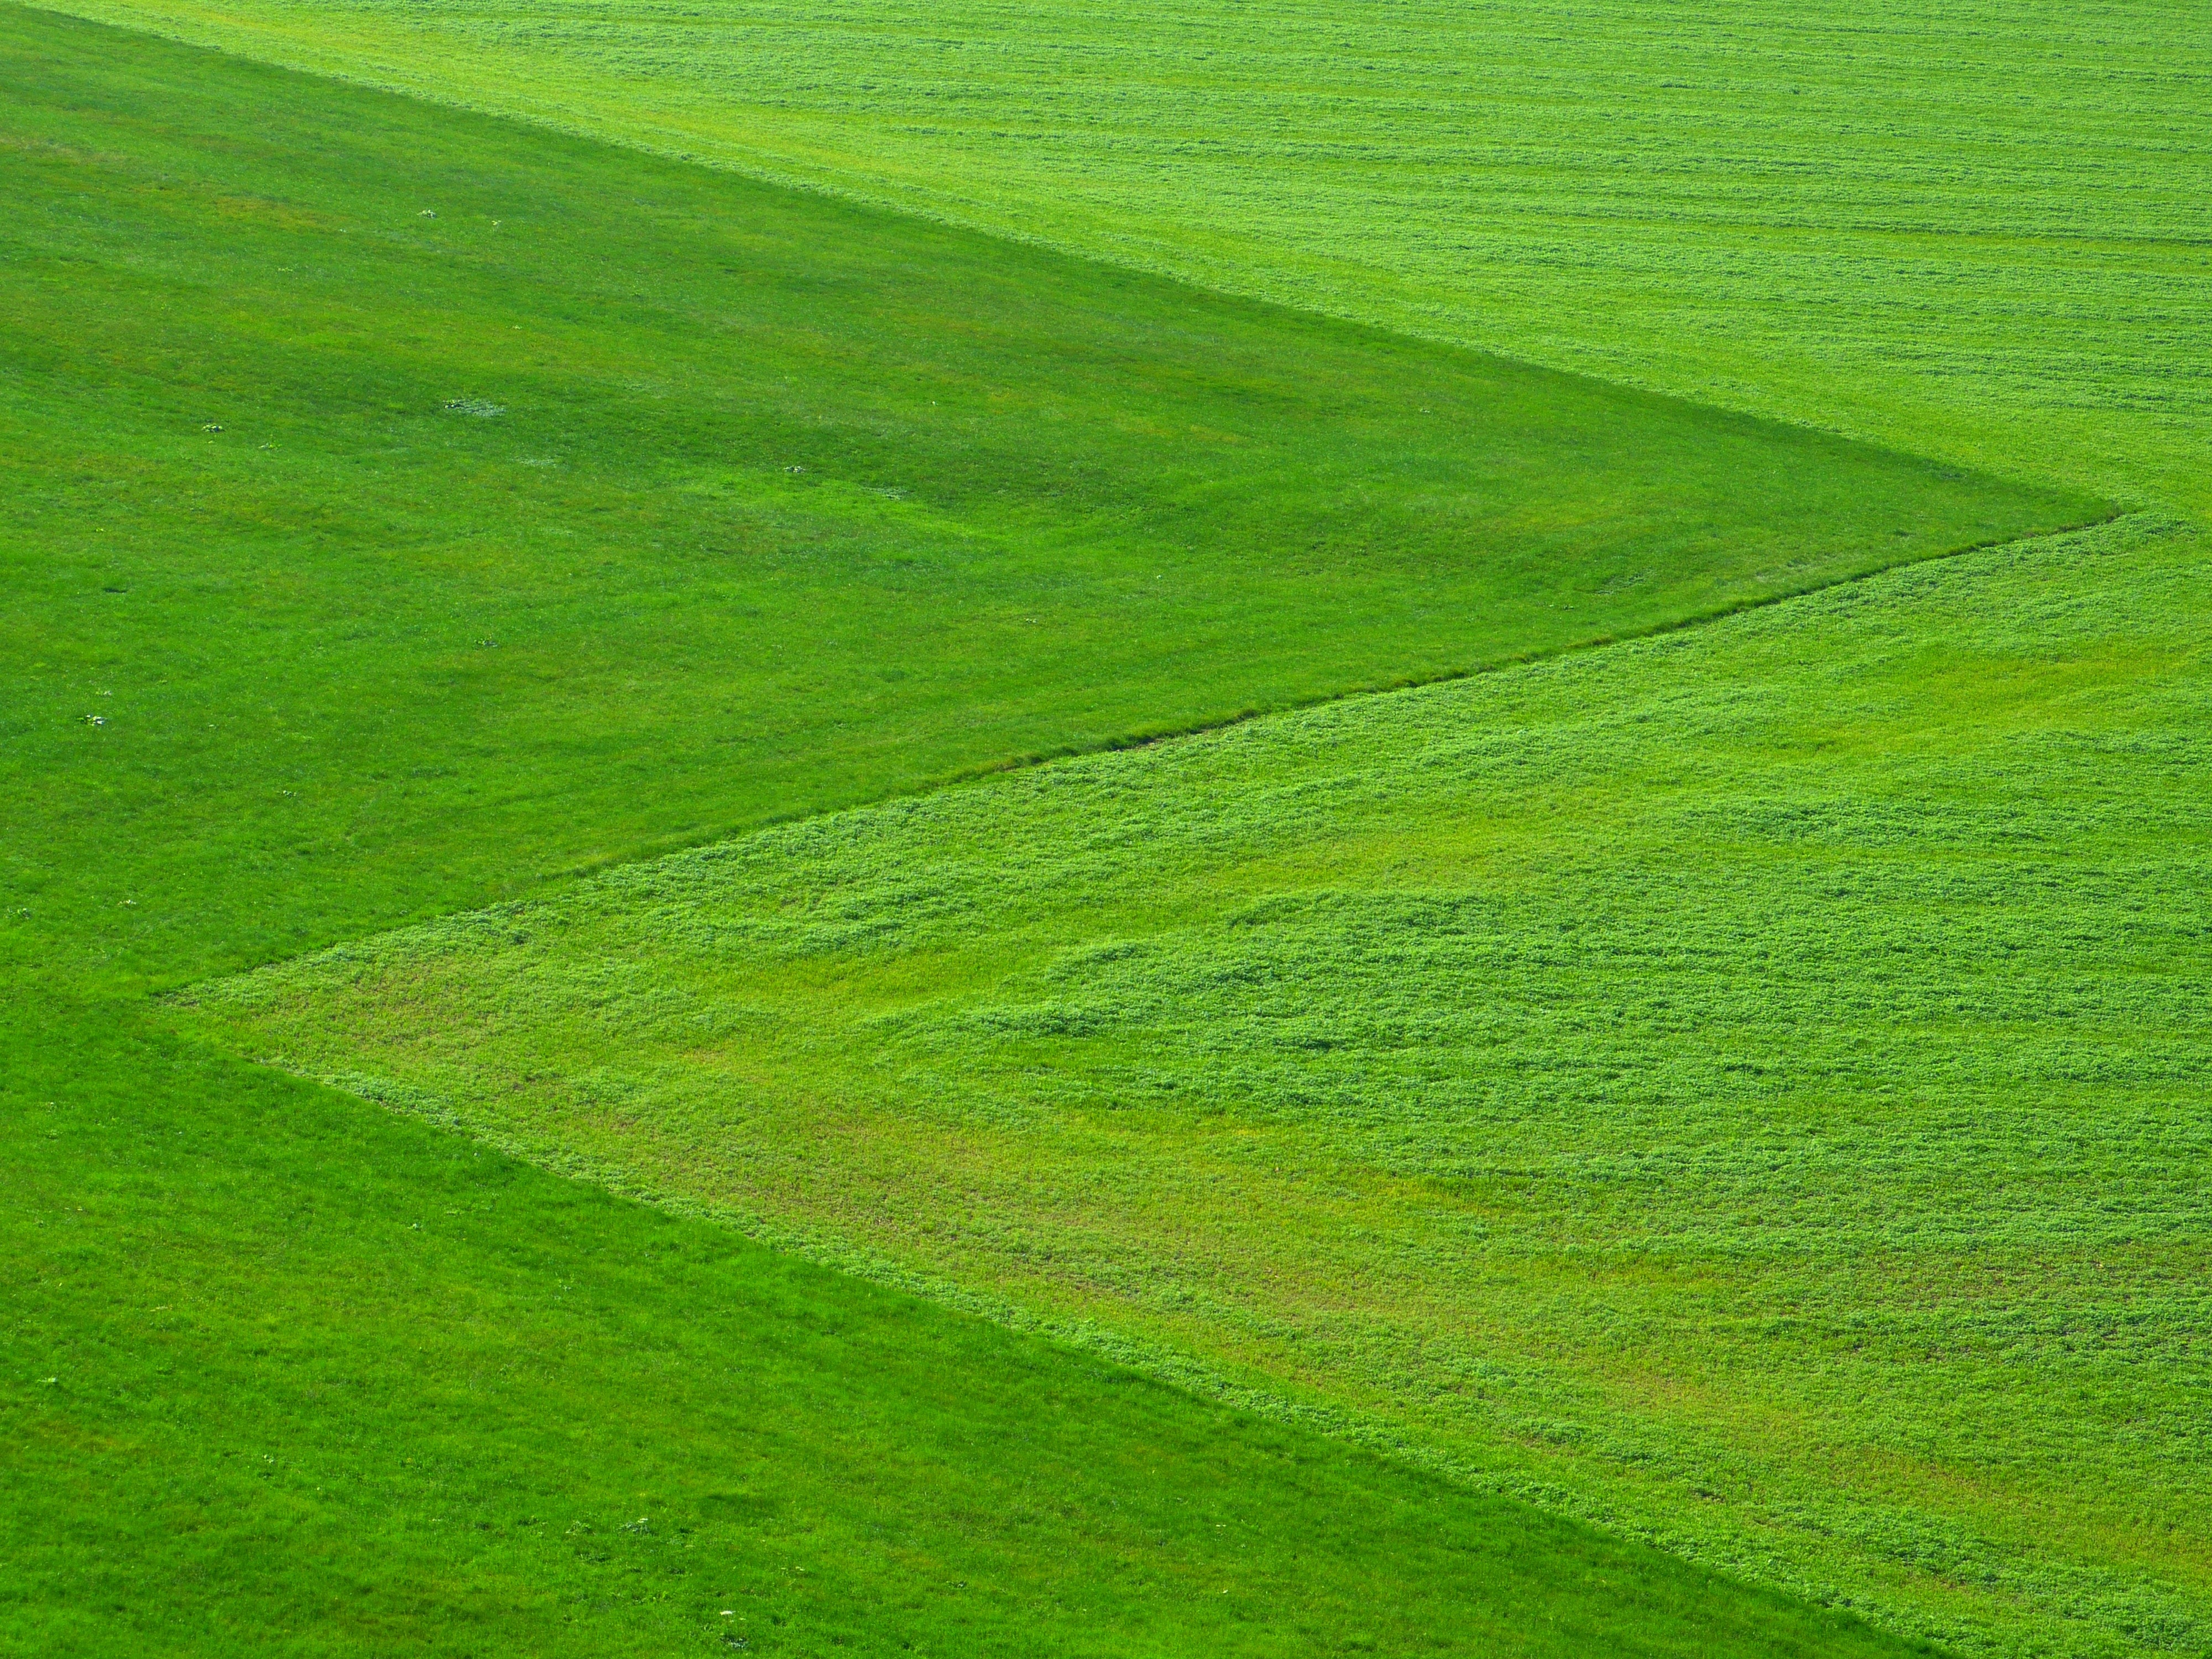 Green Grass Field · Free Stock Photo